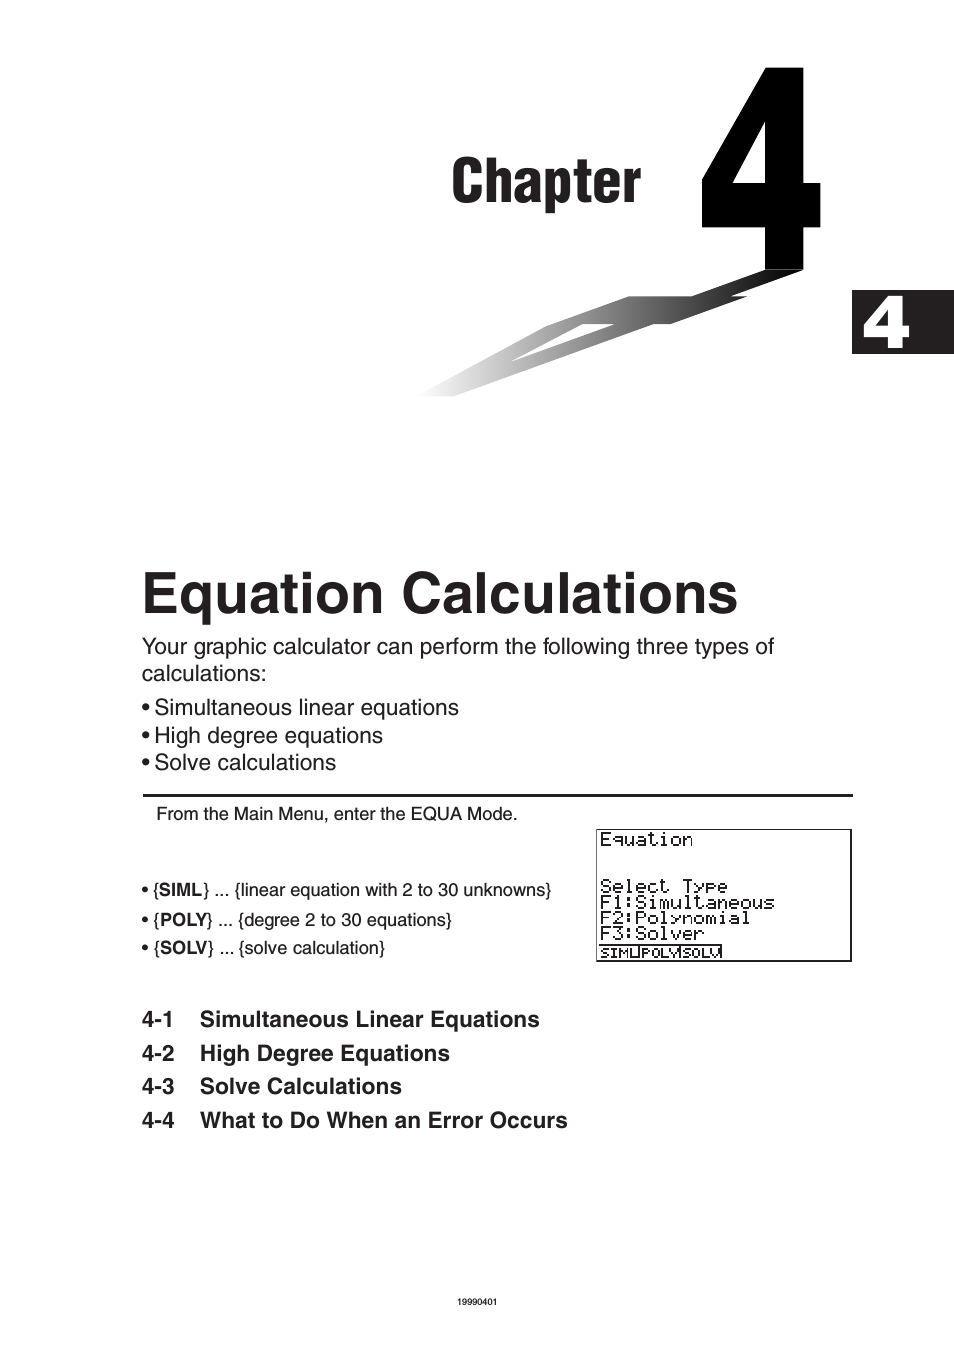 ALGEBRA FX 1.0 PLUS Equation Calculations (Page 1)